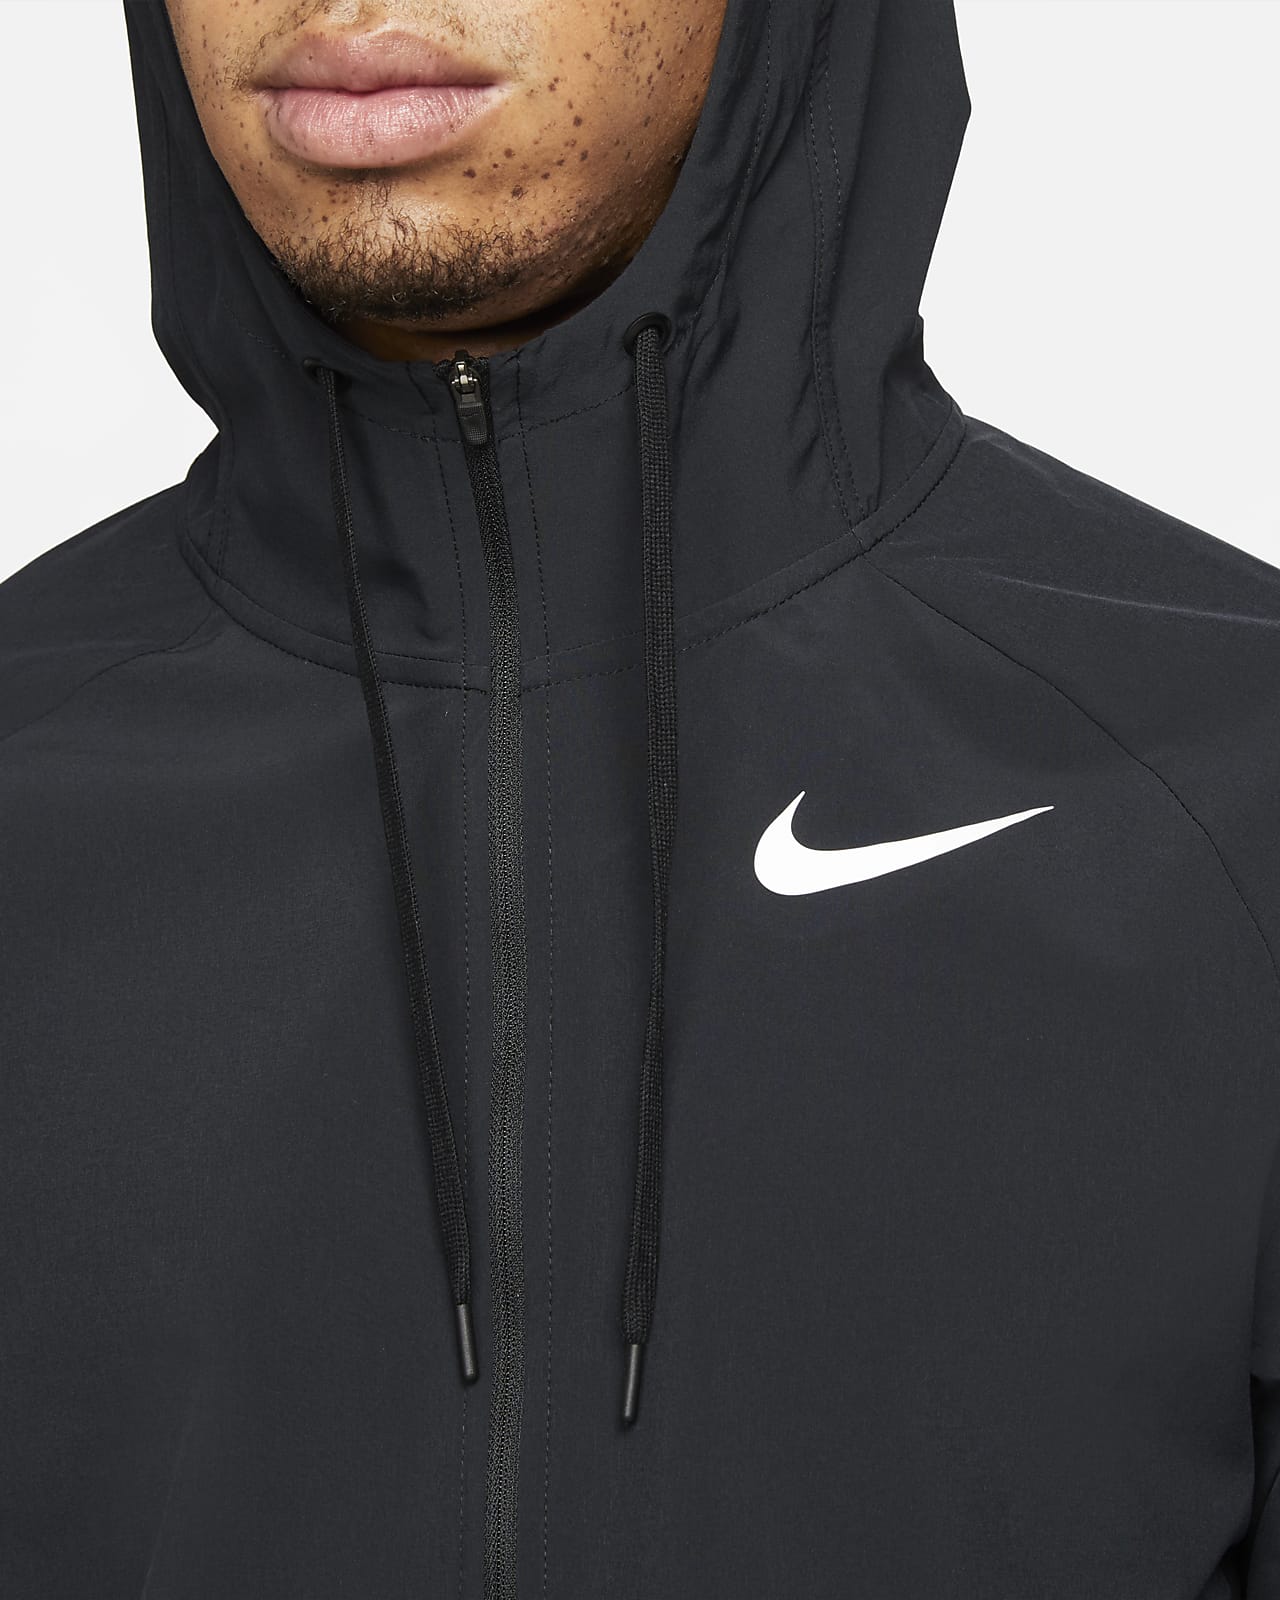 Circunferencia perderse Por Nike Pro Dri-FIT Flex Vent Max Men's Full-Zip Hooded Training Jacket. Nike .com